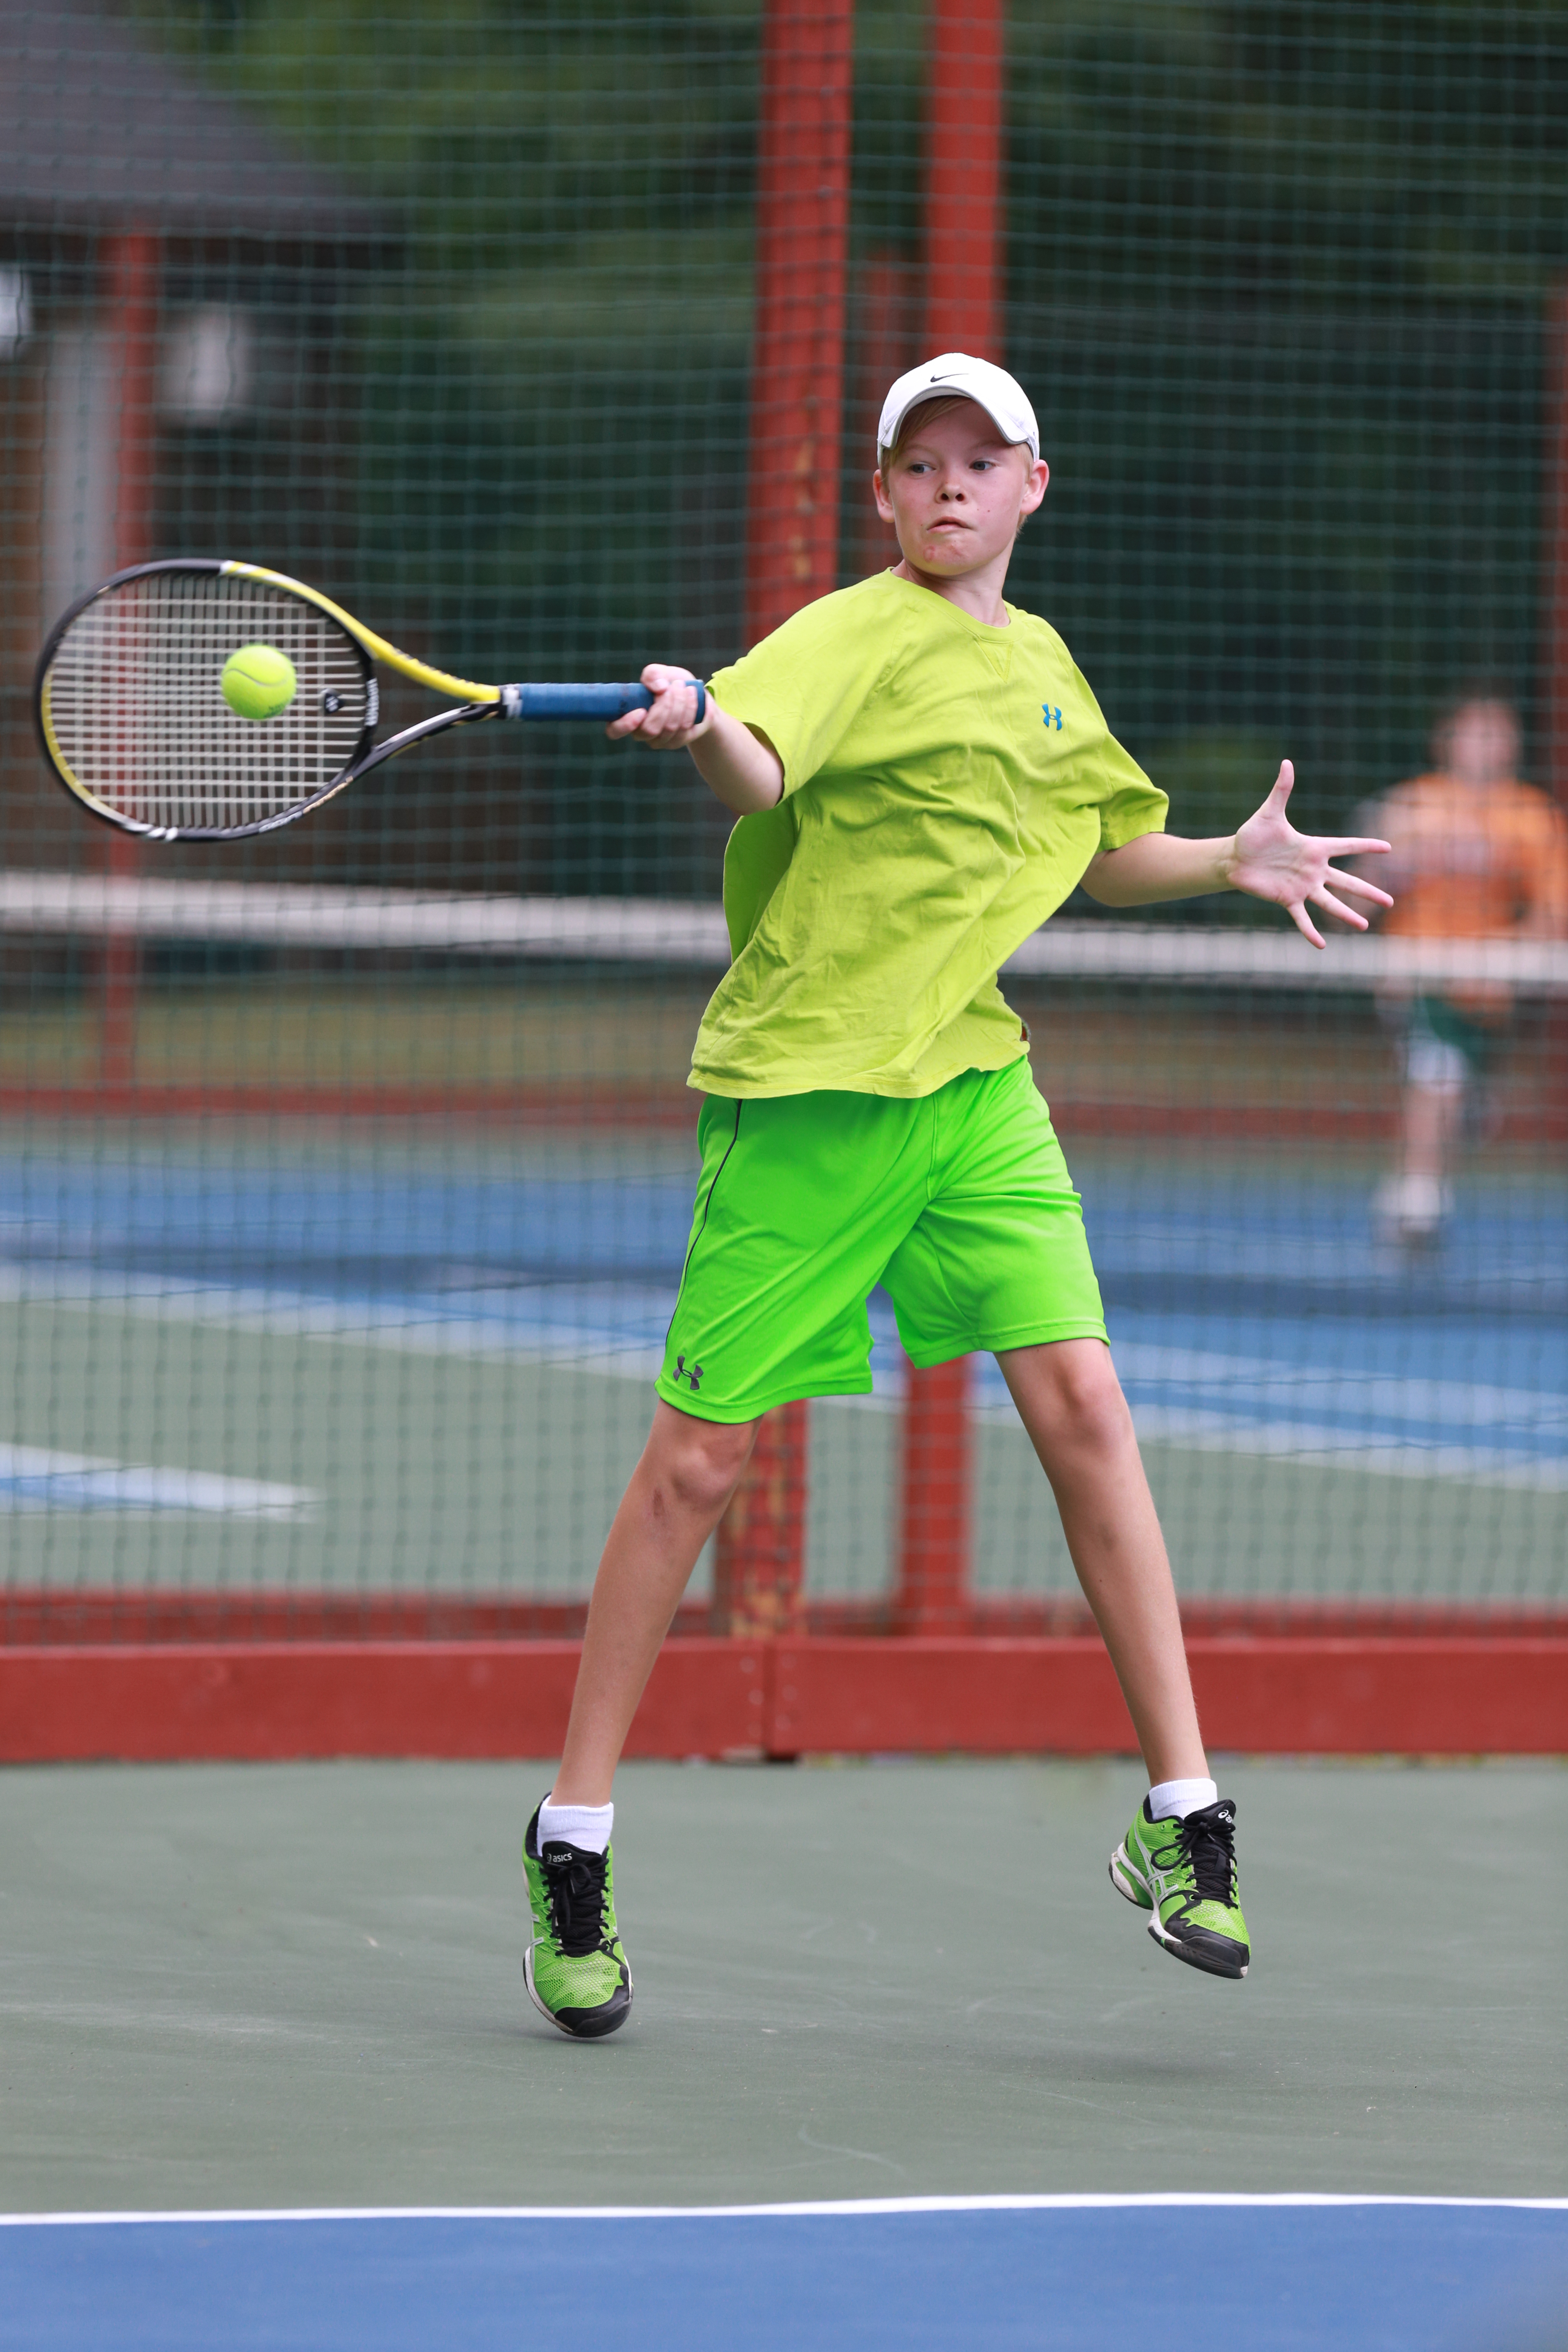 Tennis Anyone… | Camp Laurel - Maine Summer Camp Blog